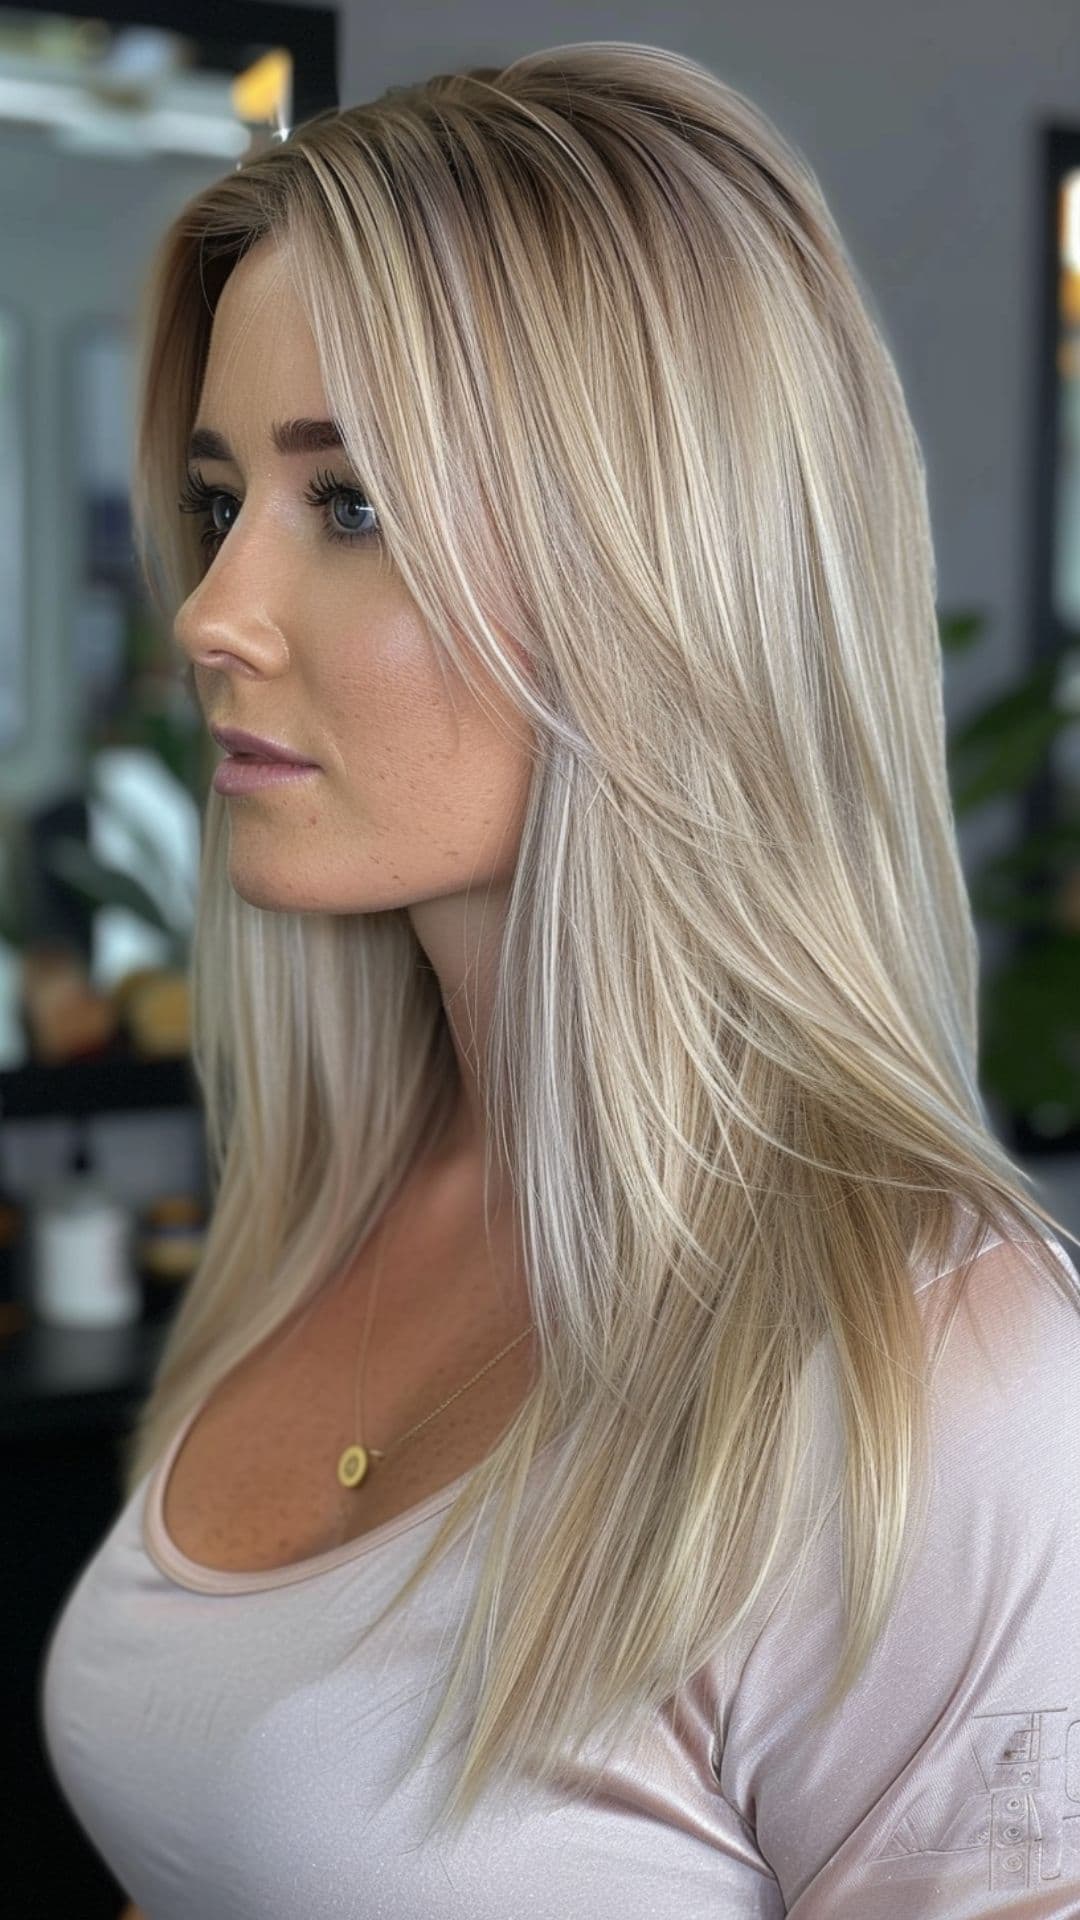 A woman modelling an subtle ash blonde highlights hair.